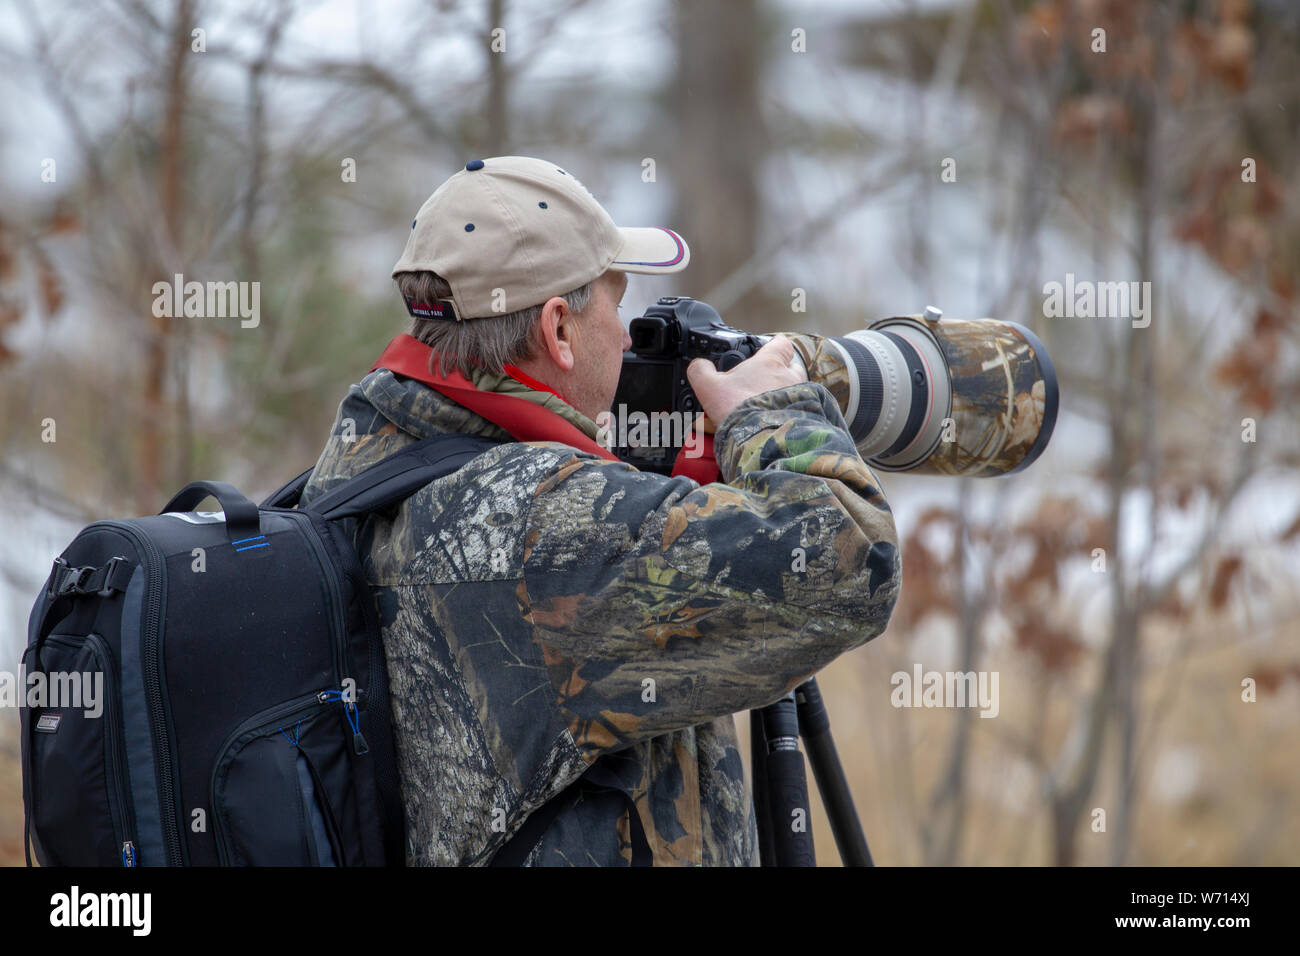 Bird photographer with great camera optics looks for birds Stock Photo